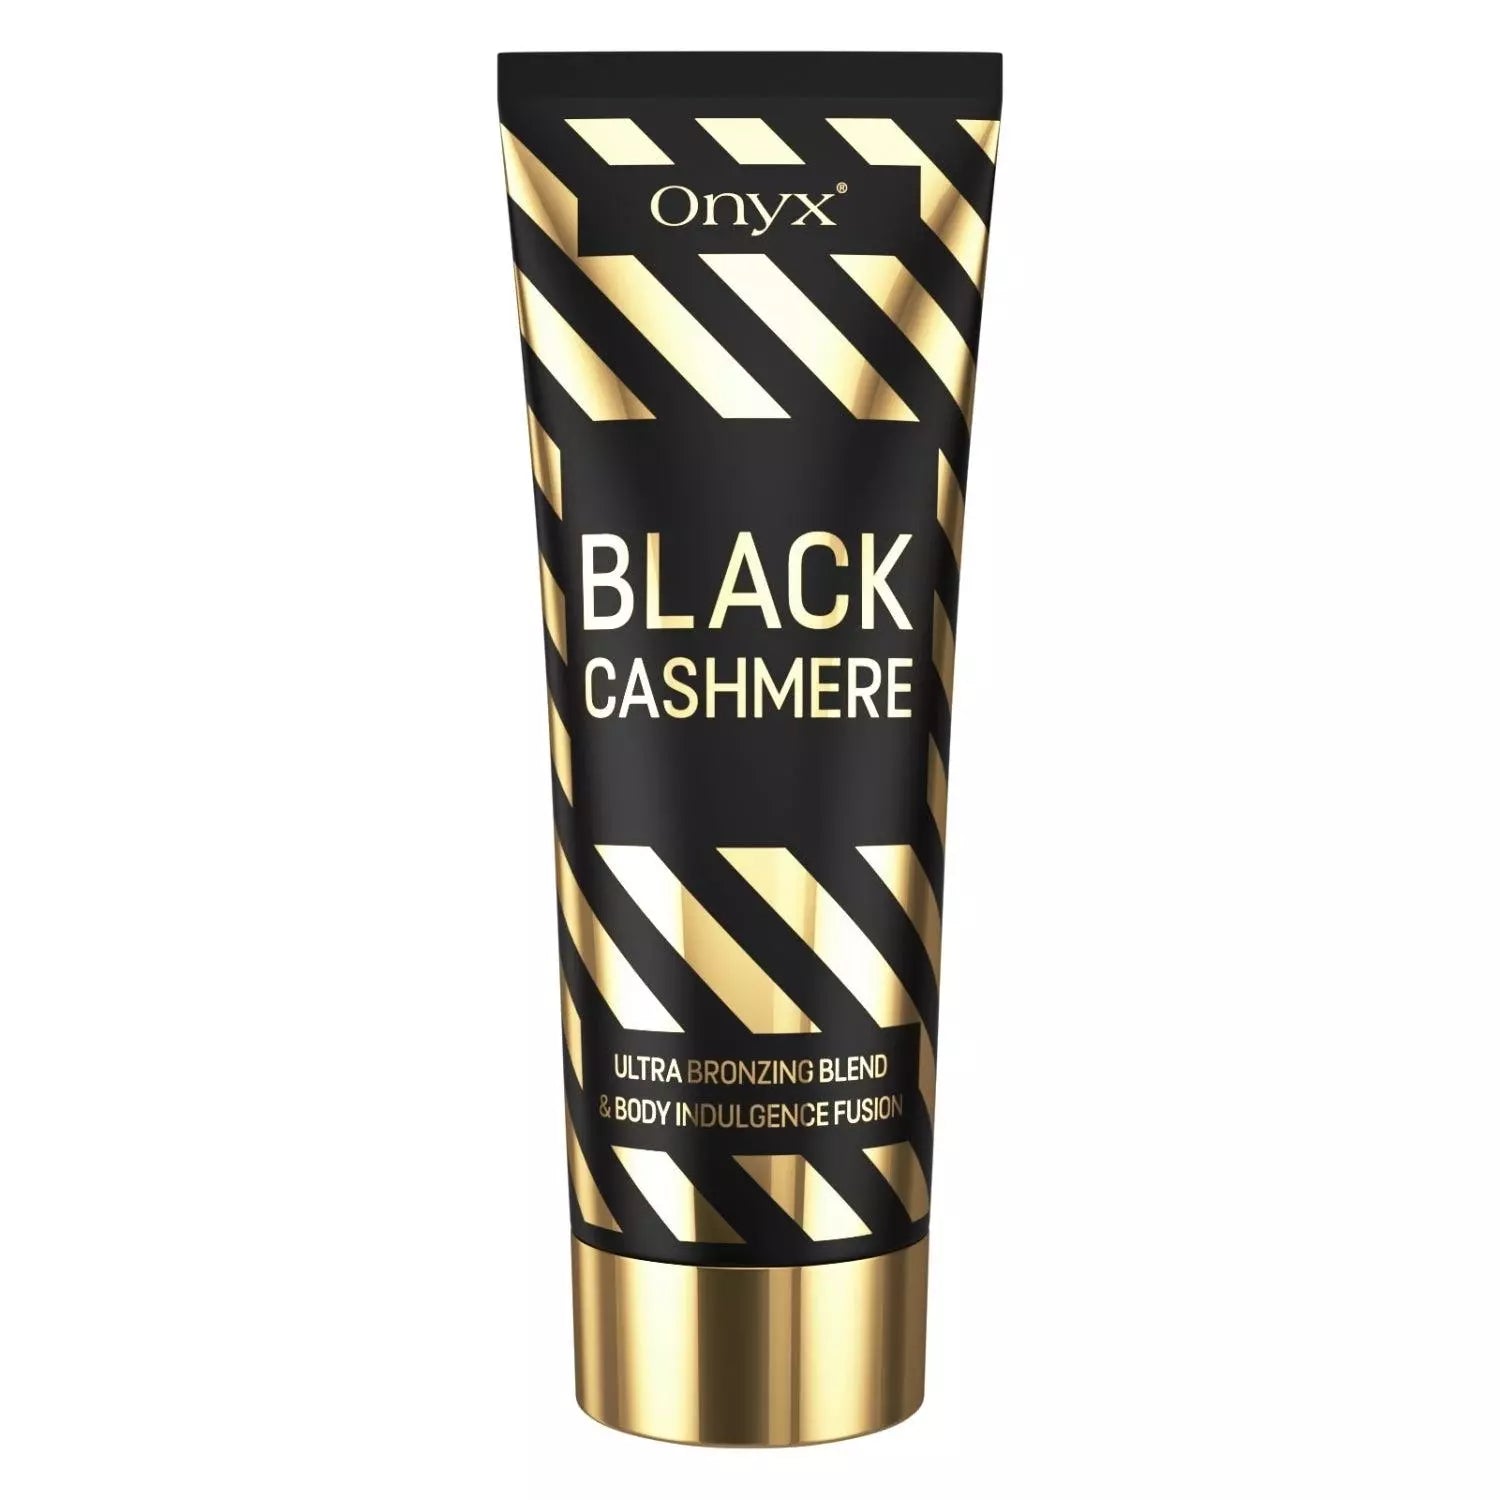 Onyx Black Cashmere Solarium Kosmetik mit Bronzer